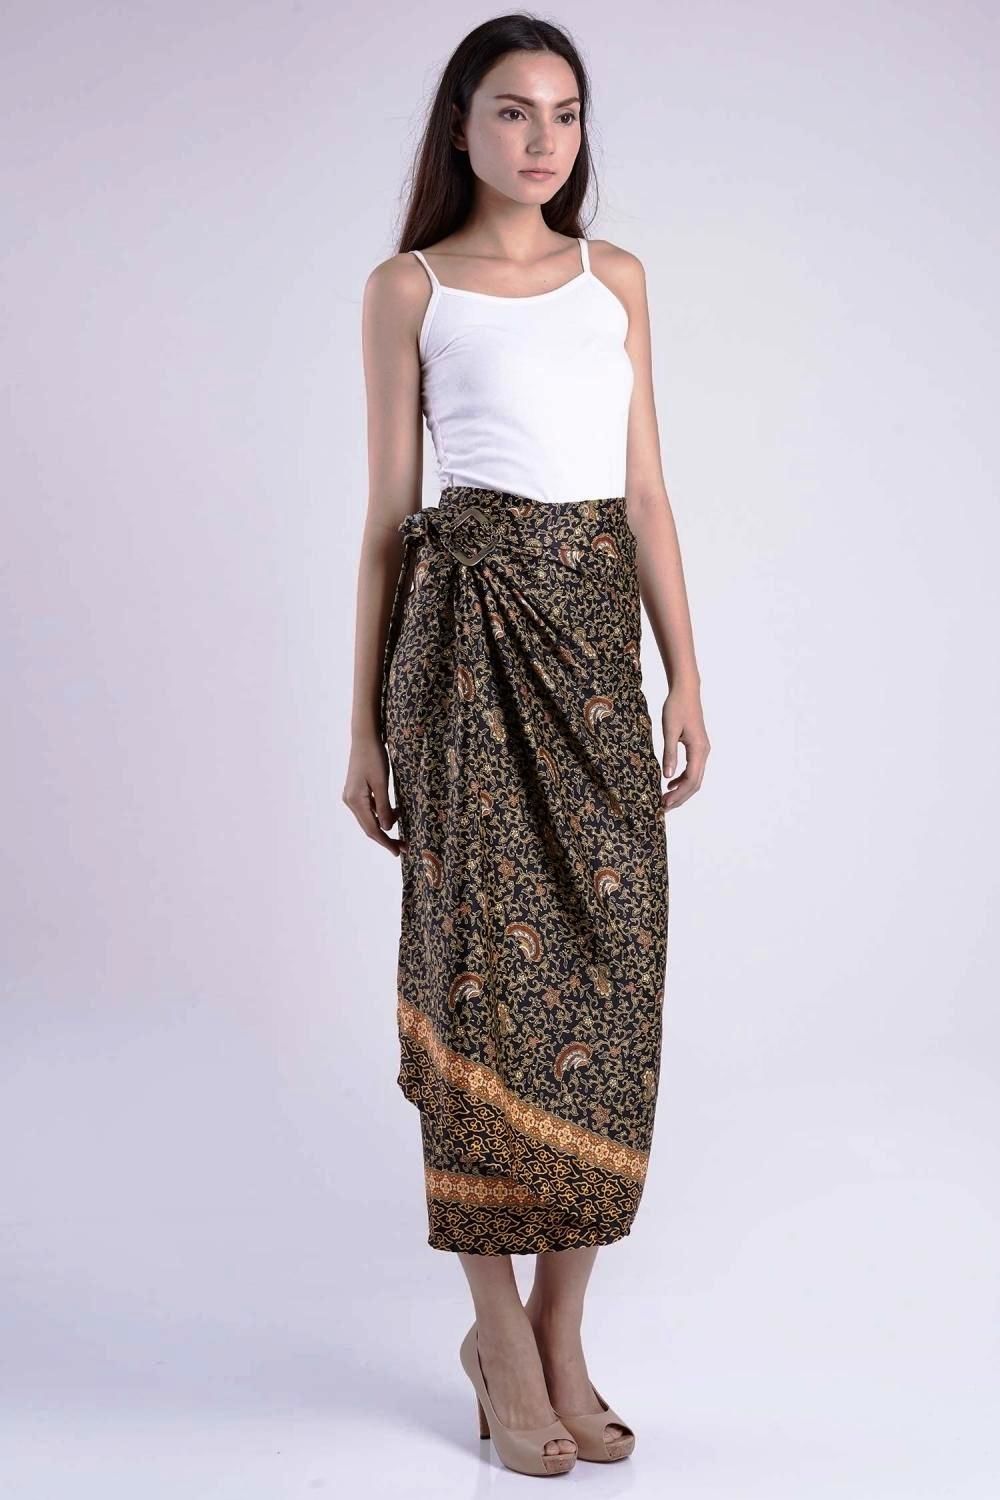  Model Rok Batik Panjang untuk orang Pendek 51 Inspirasi Modis Model Baju Dan Rok Batik Pendek